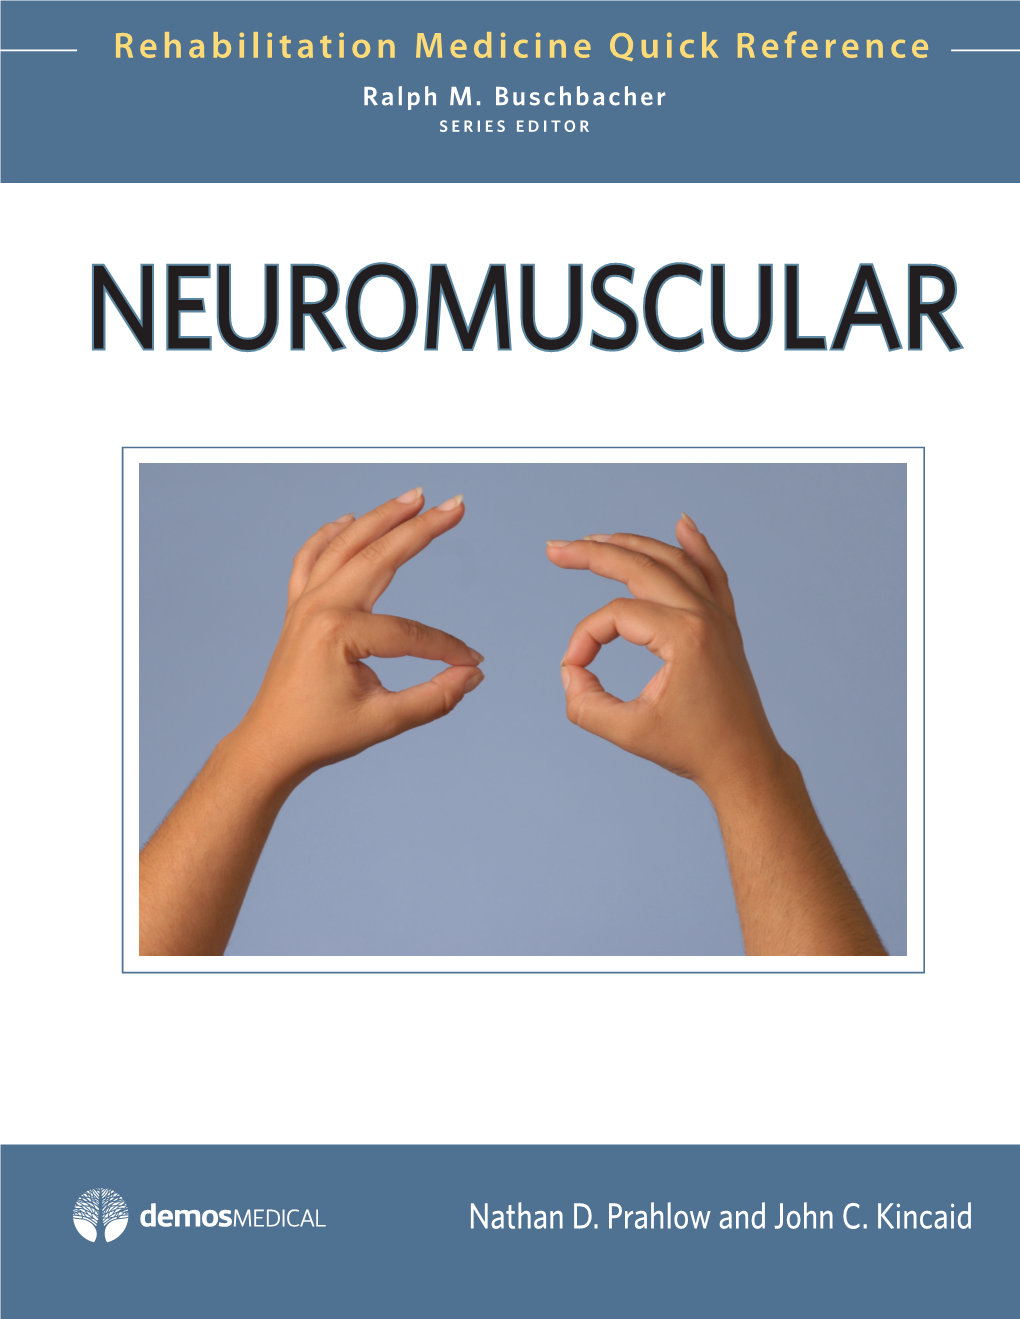 Neuromuscular: Rehabilitation Medicine Quick Reference